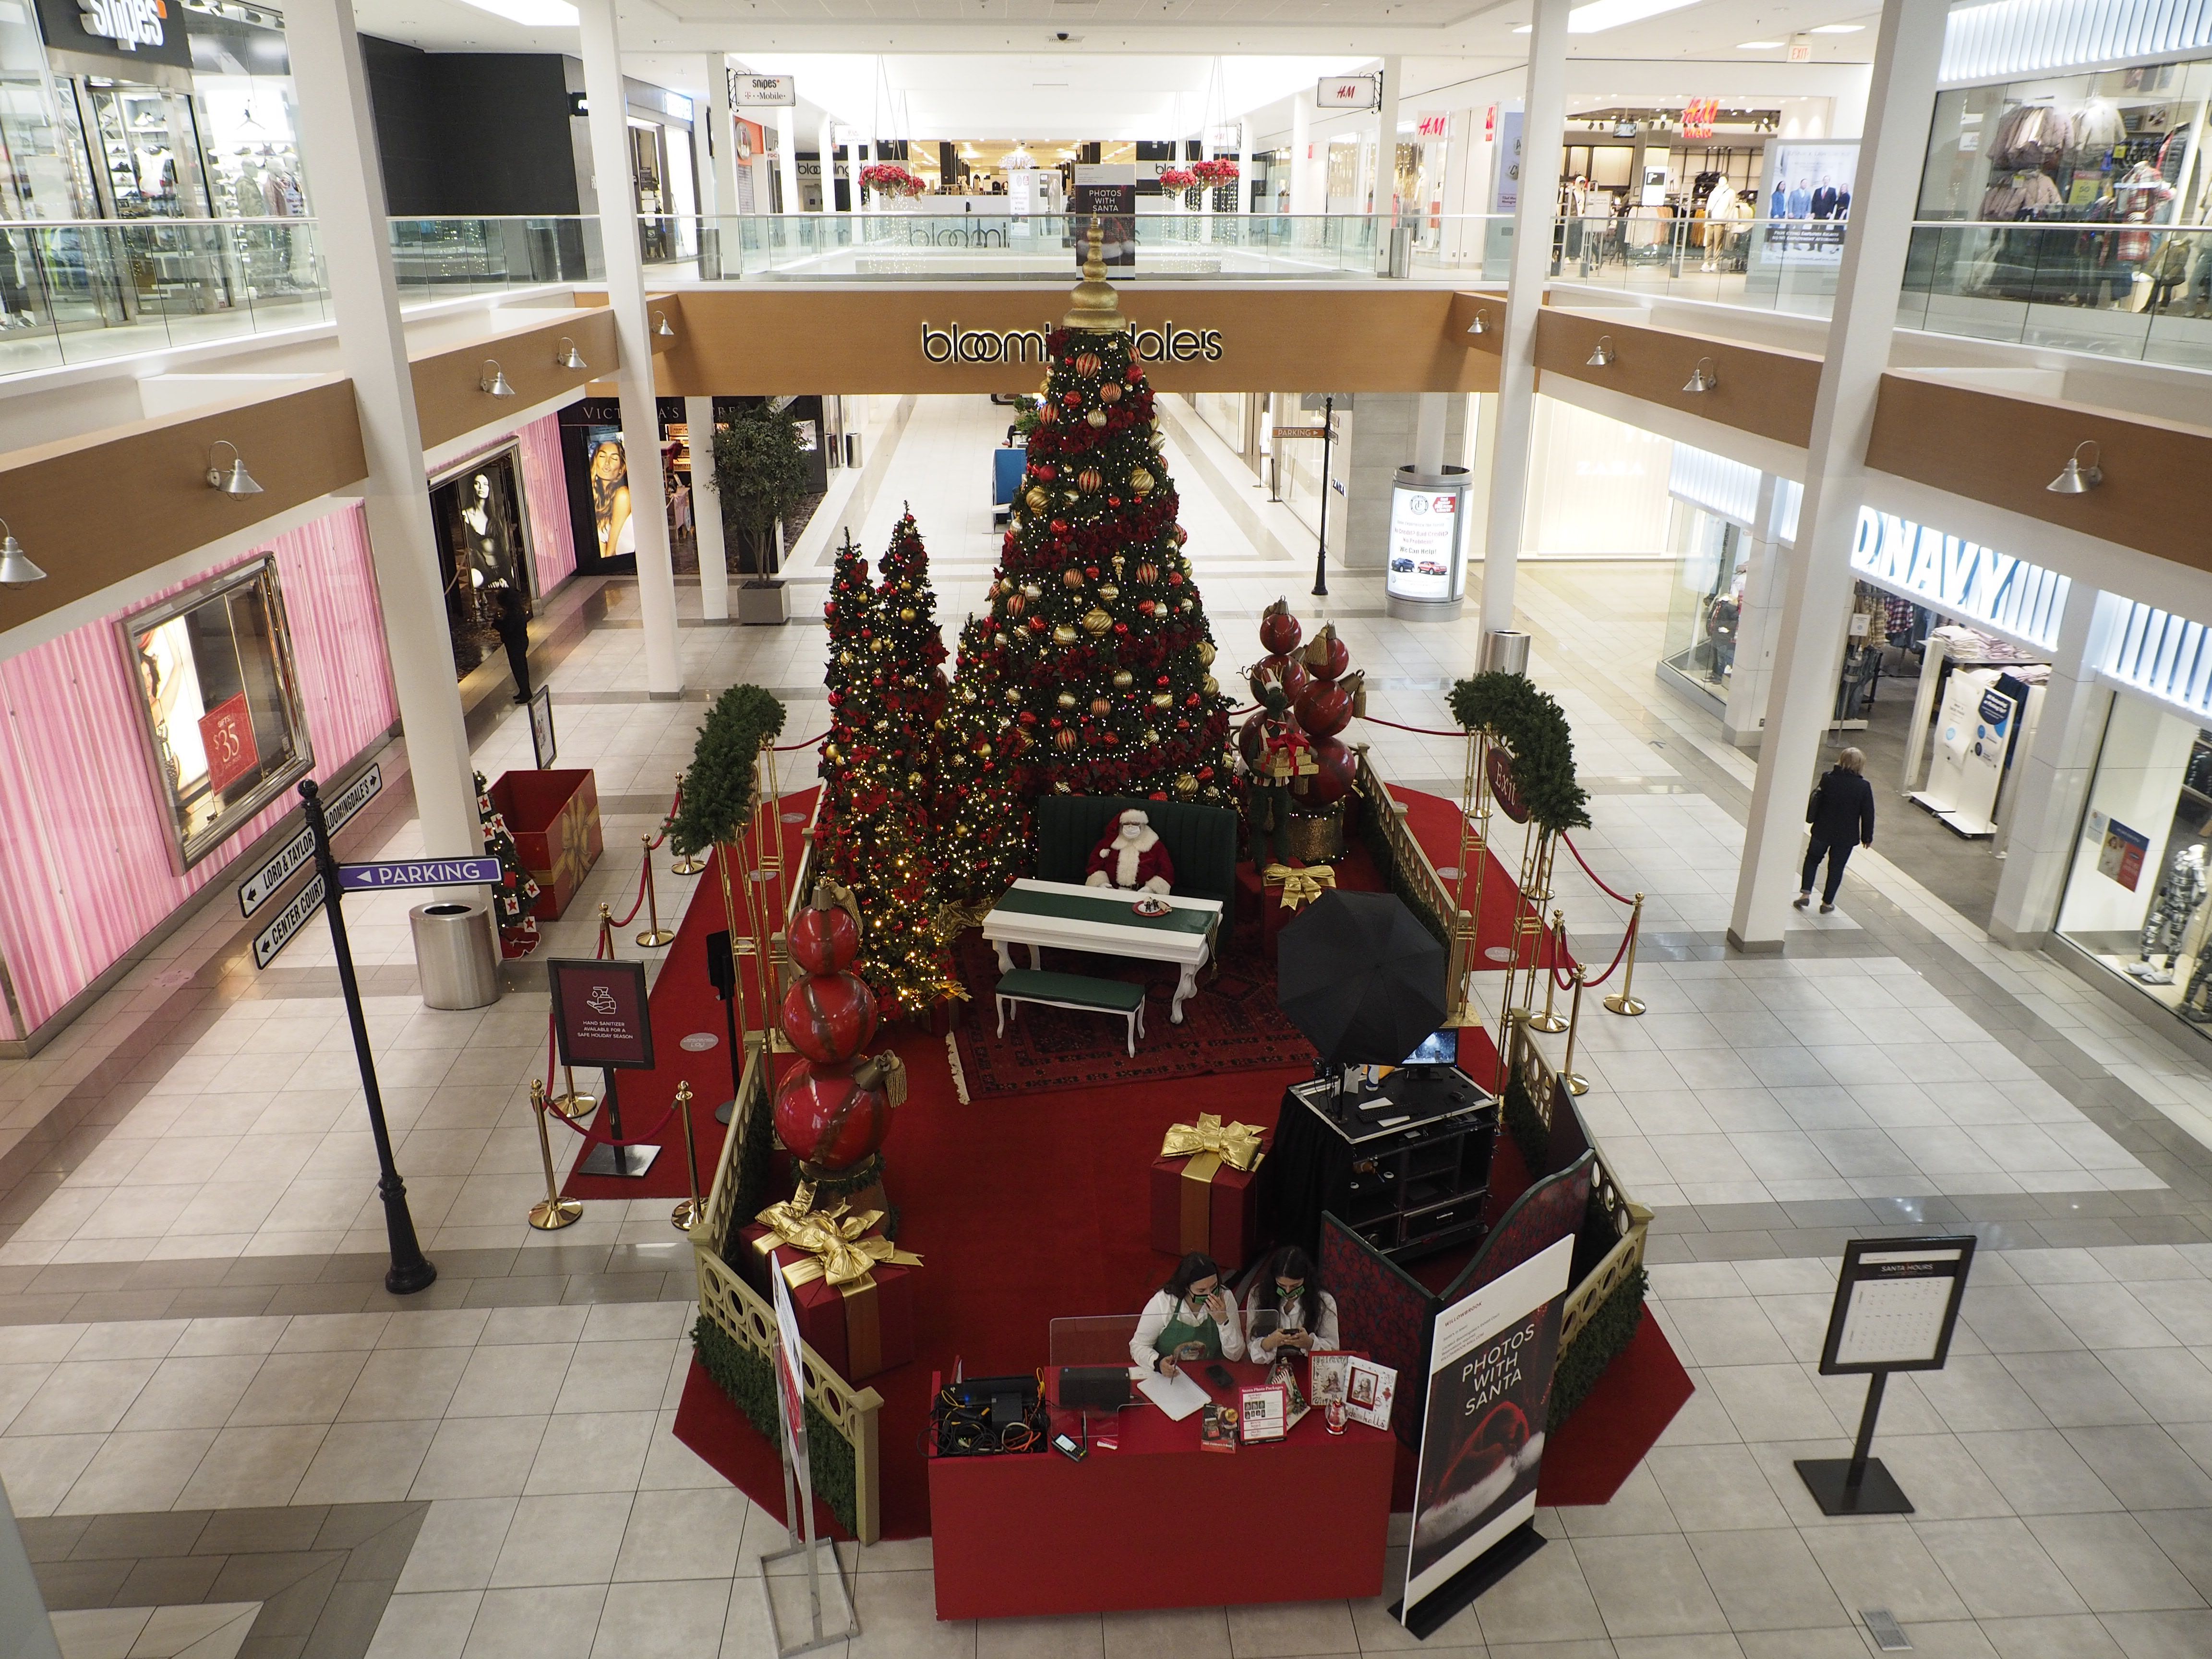 Mall Santa photos continue despite COVID-19 — with special precautions